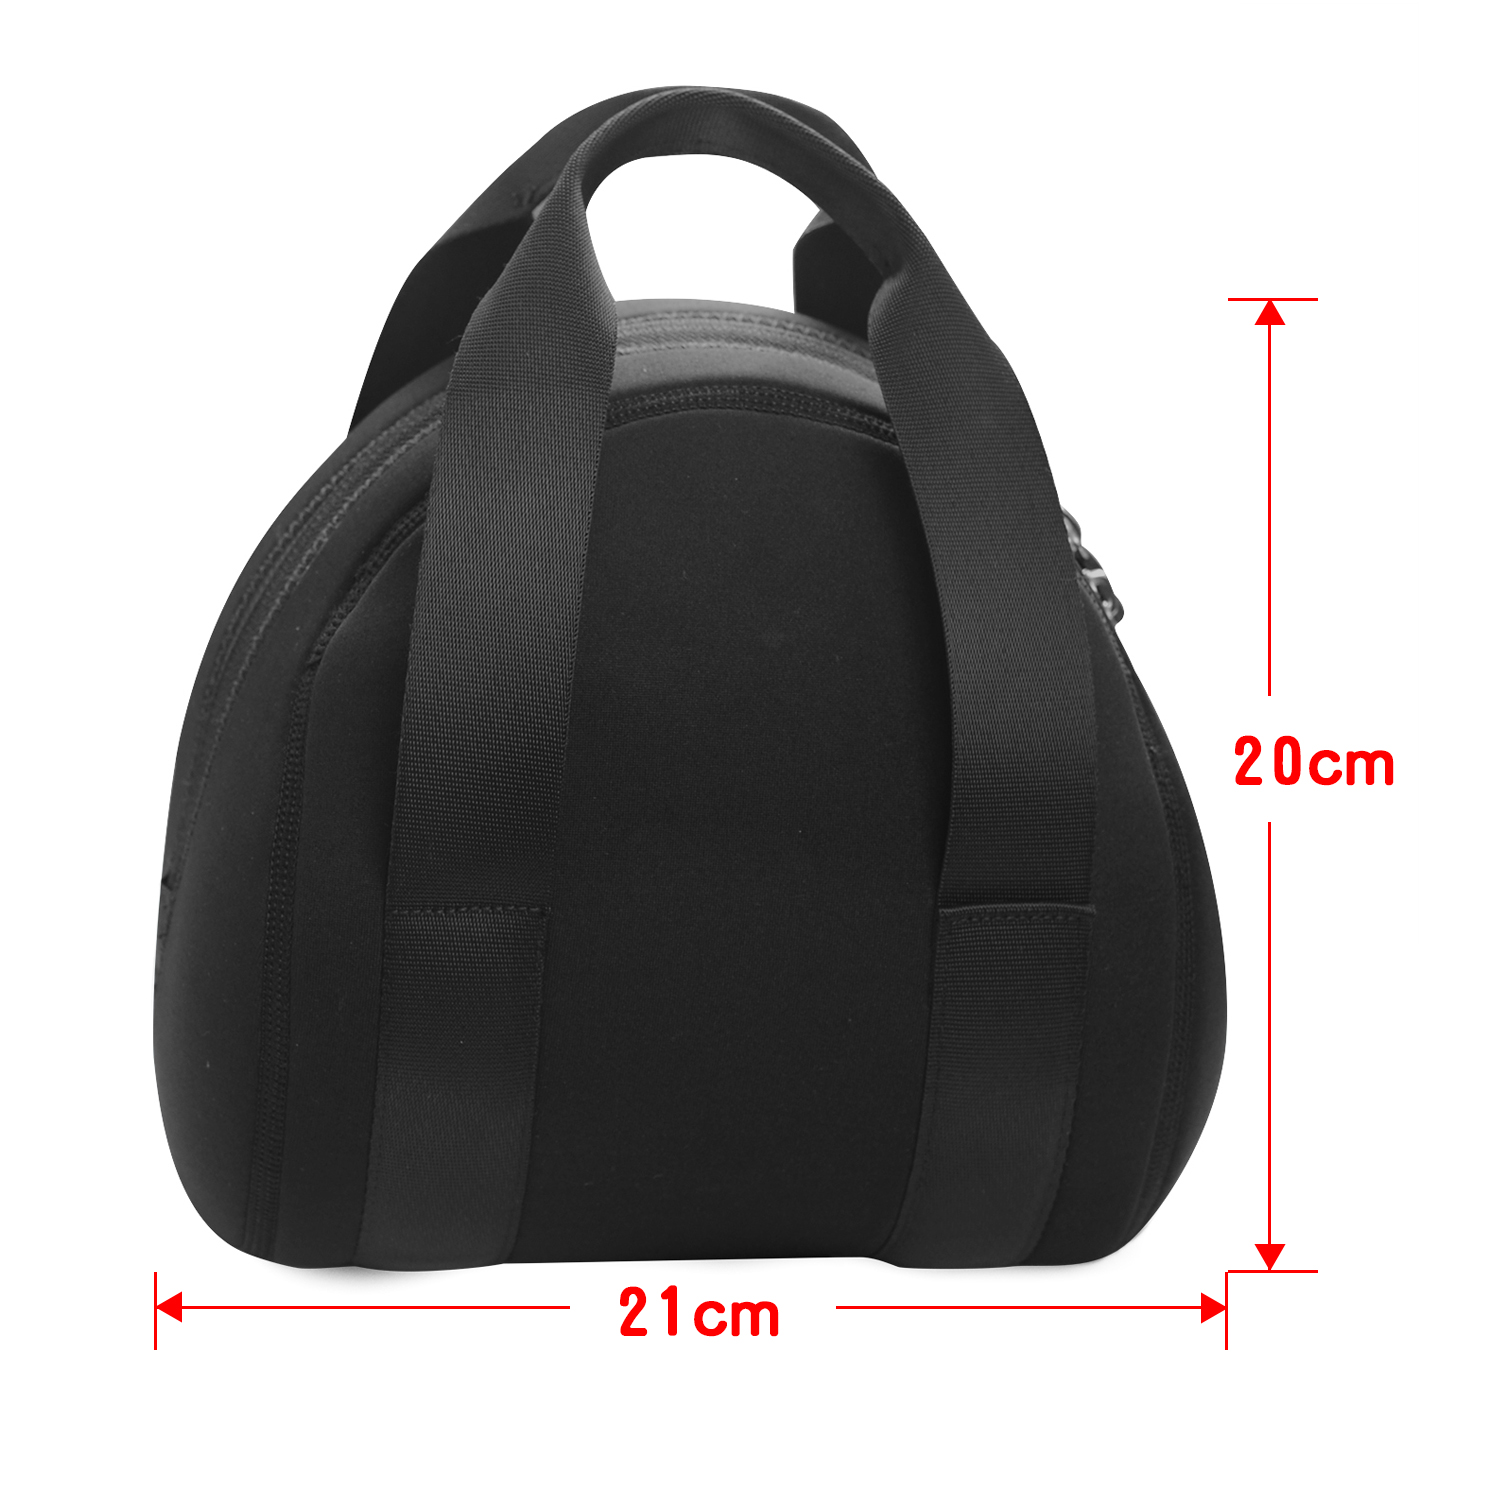 Bakeey-Speaker-Storage-Bag-Protective-Cover-Handbag-Portable-Outdoor-Travel-Spots-Soft-Carrying-Bag--1830329-7